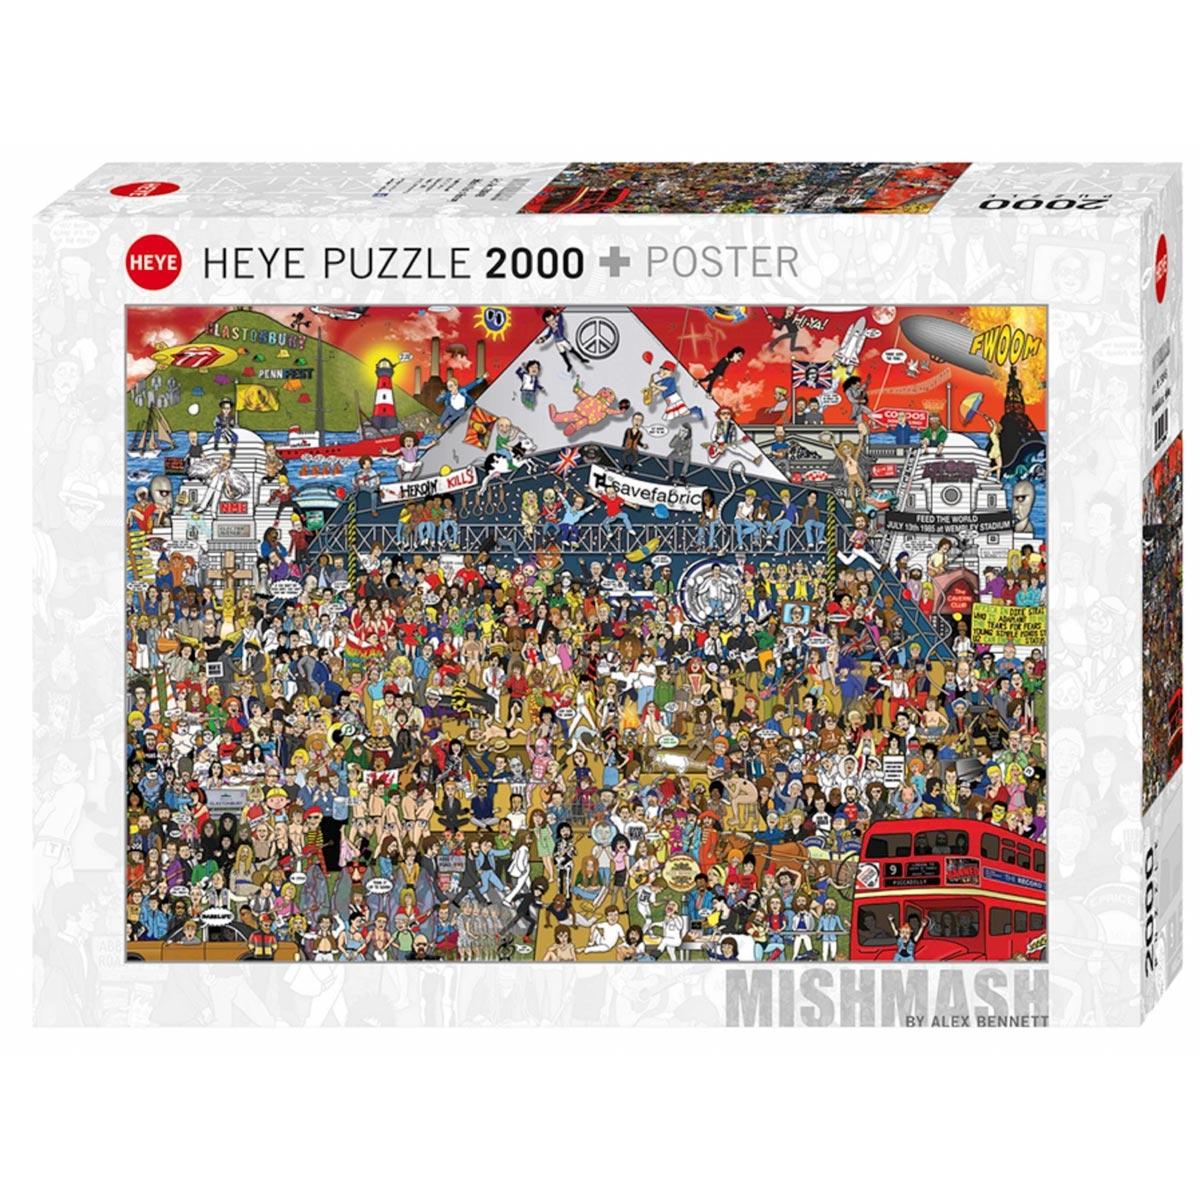 HEYE Puzzle Mishmash Alex Bennett British Music 2000 delova 29848